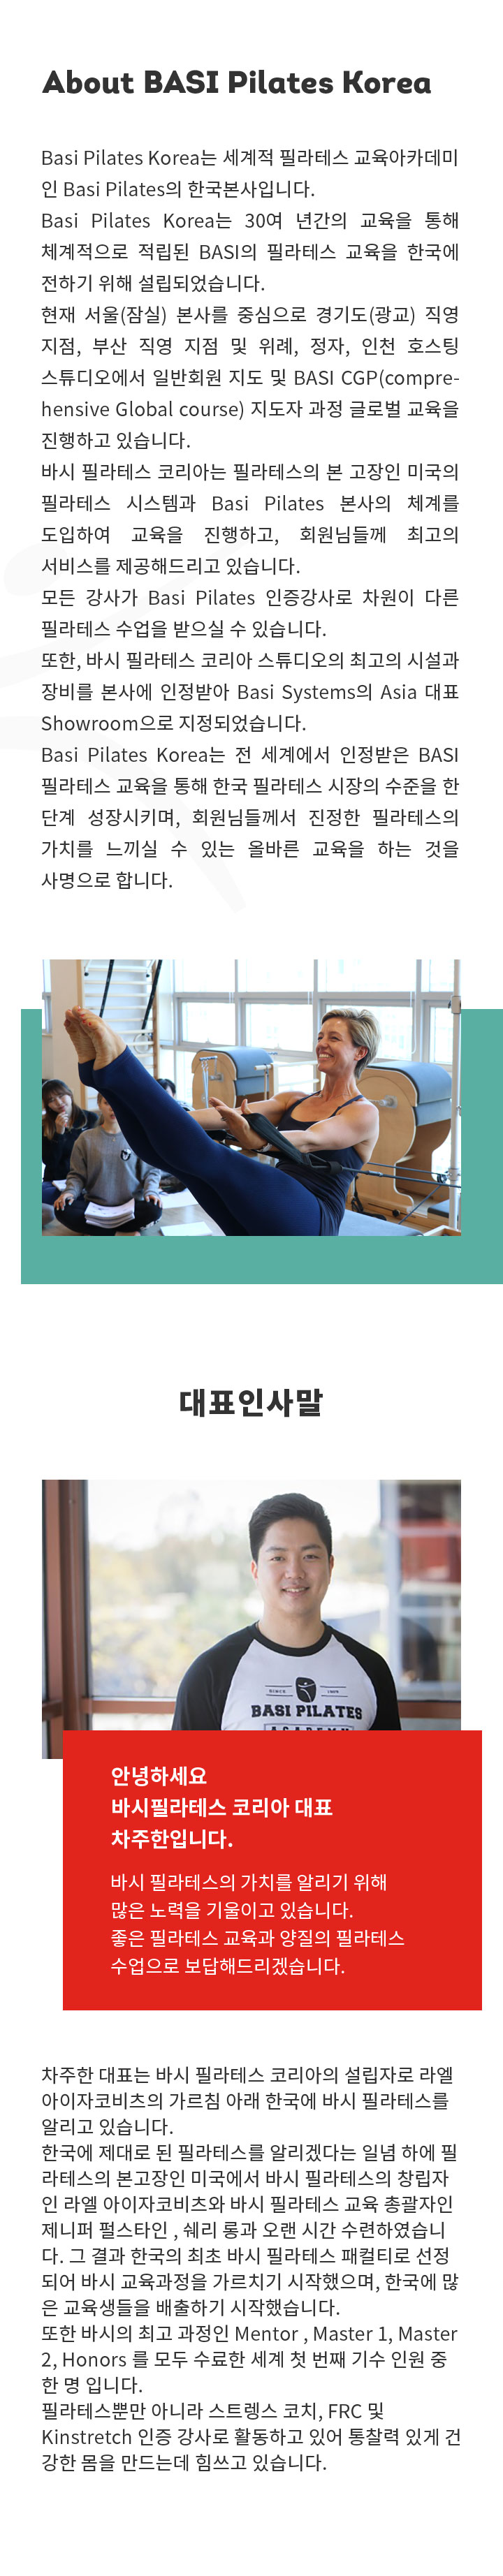 basi pilates korea